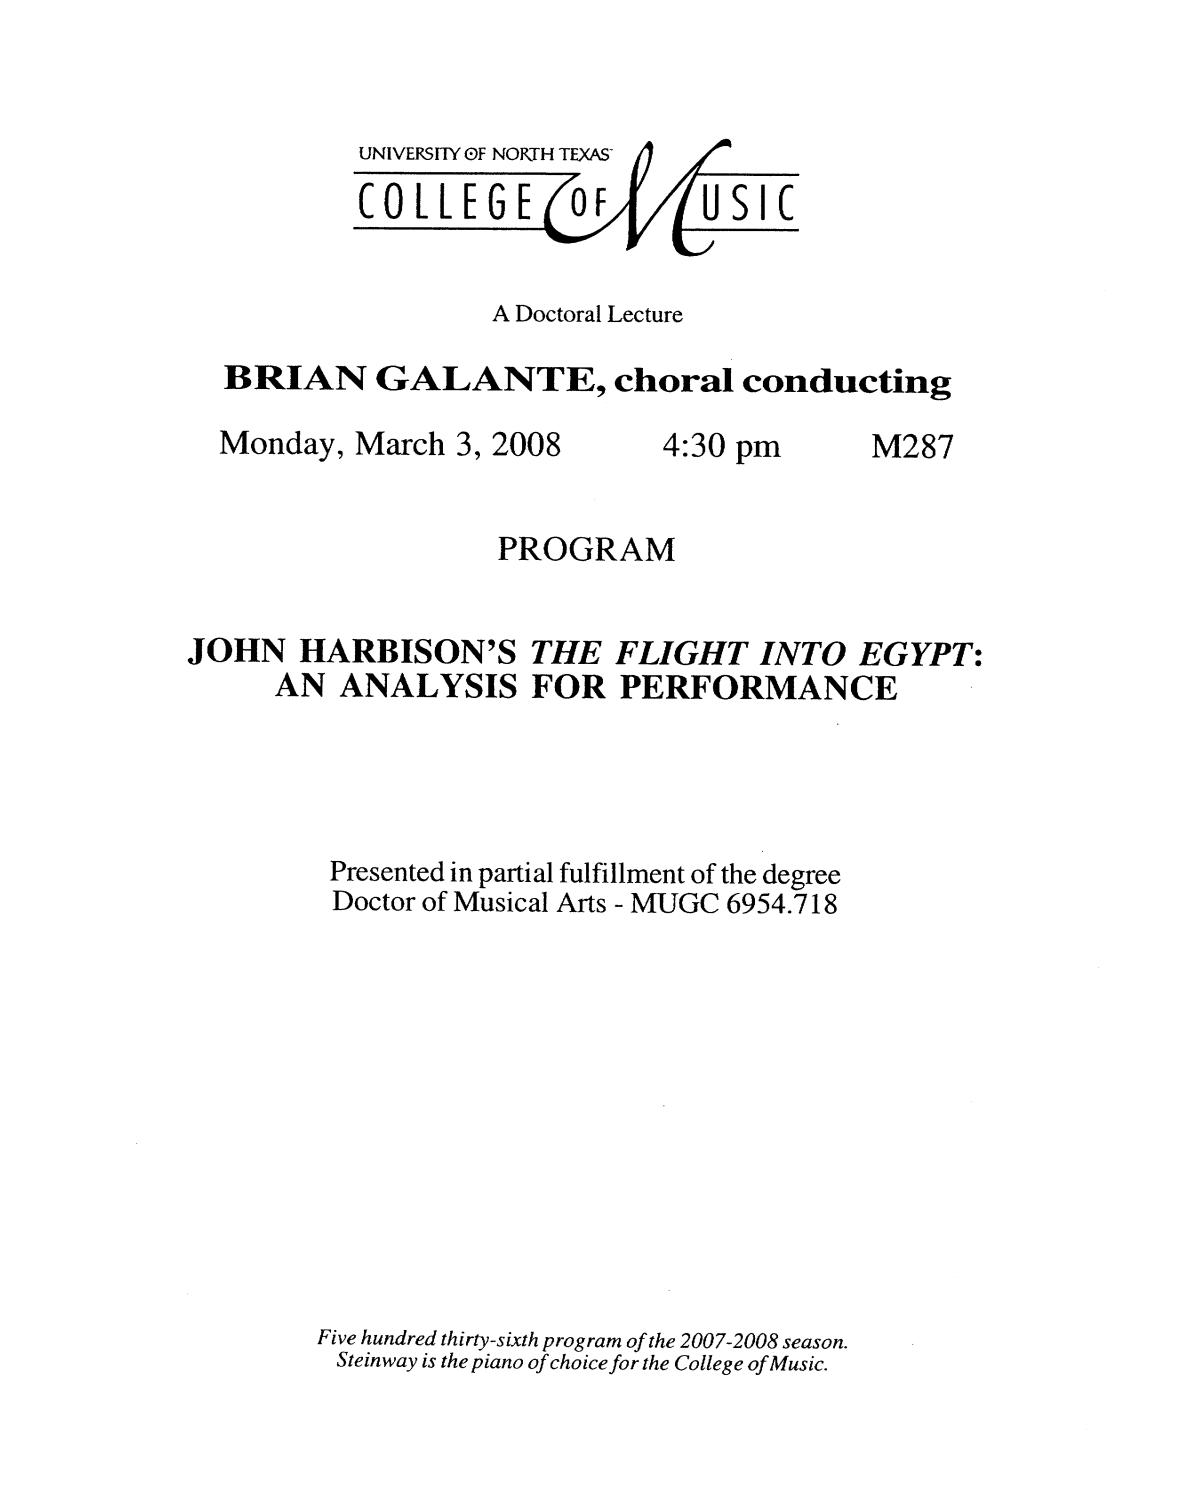 College of Music program book 2007-2008 Student Performances Vol. 2
                                                
                                                    45
                                                